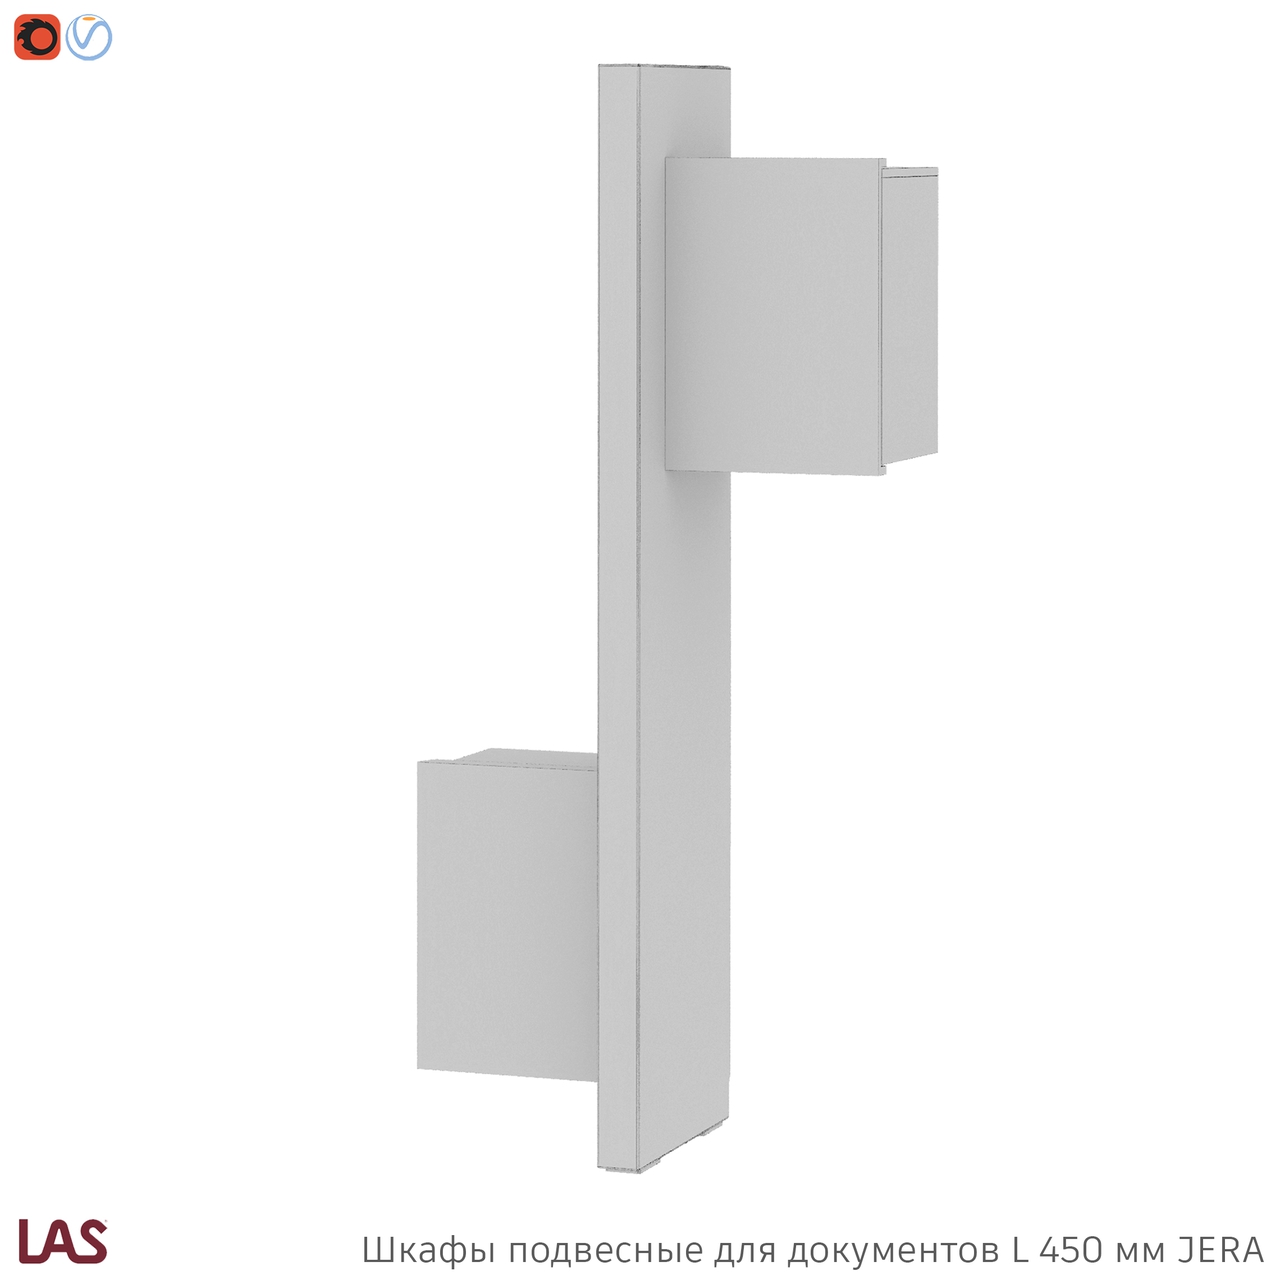 Превью G 3D-модели подвесного шкафа LAS Jera 159976